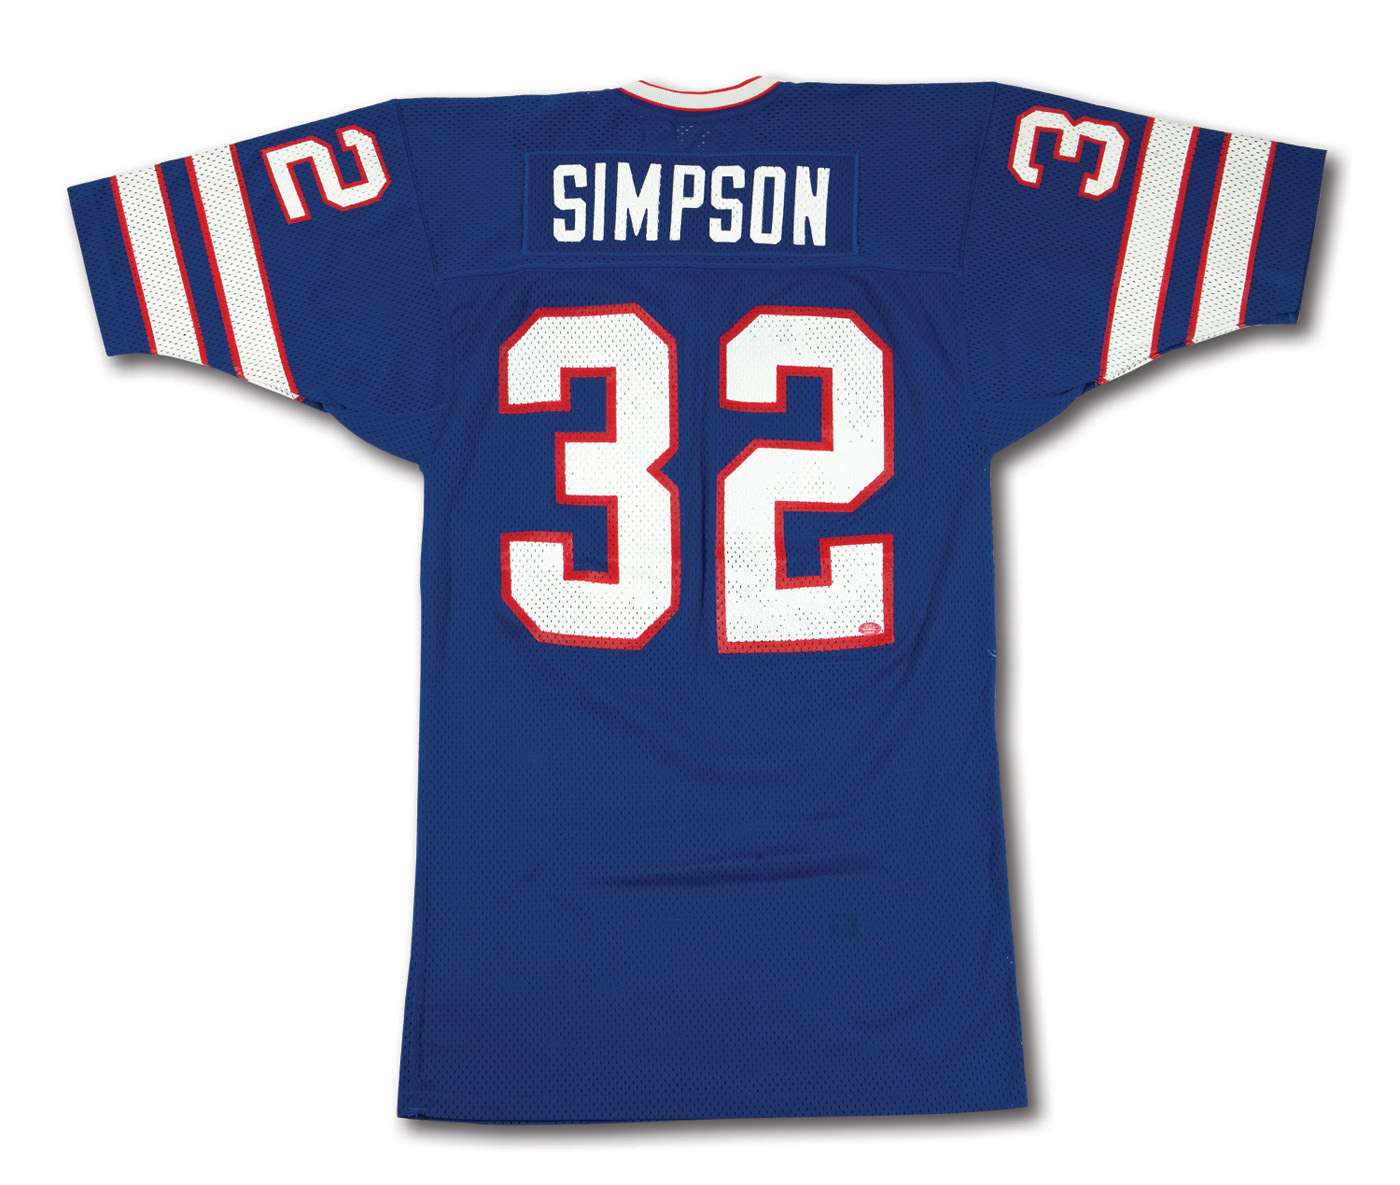 O.J. Simpson showed up at Bills home game